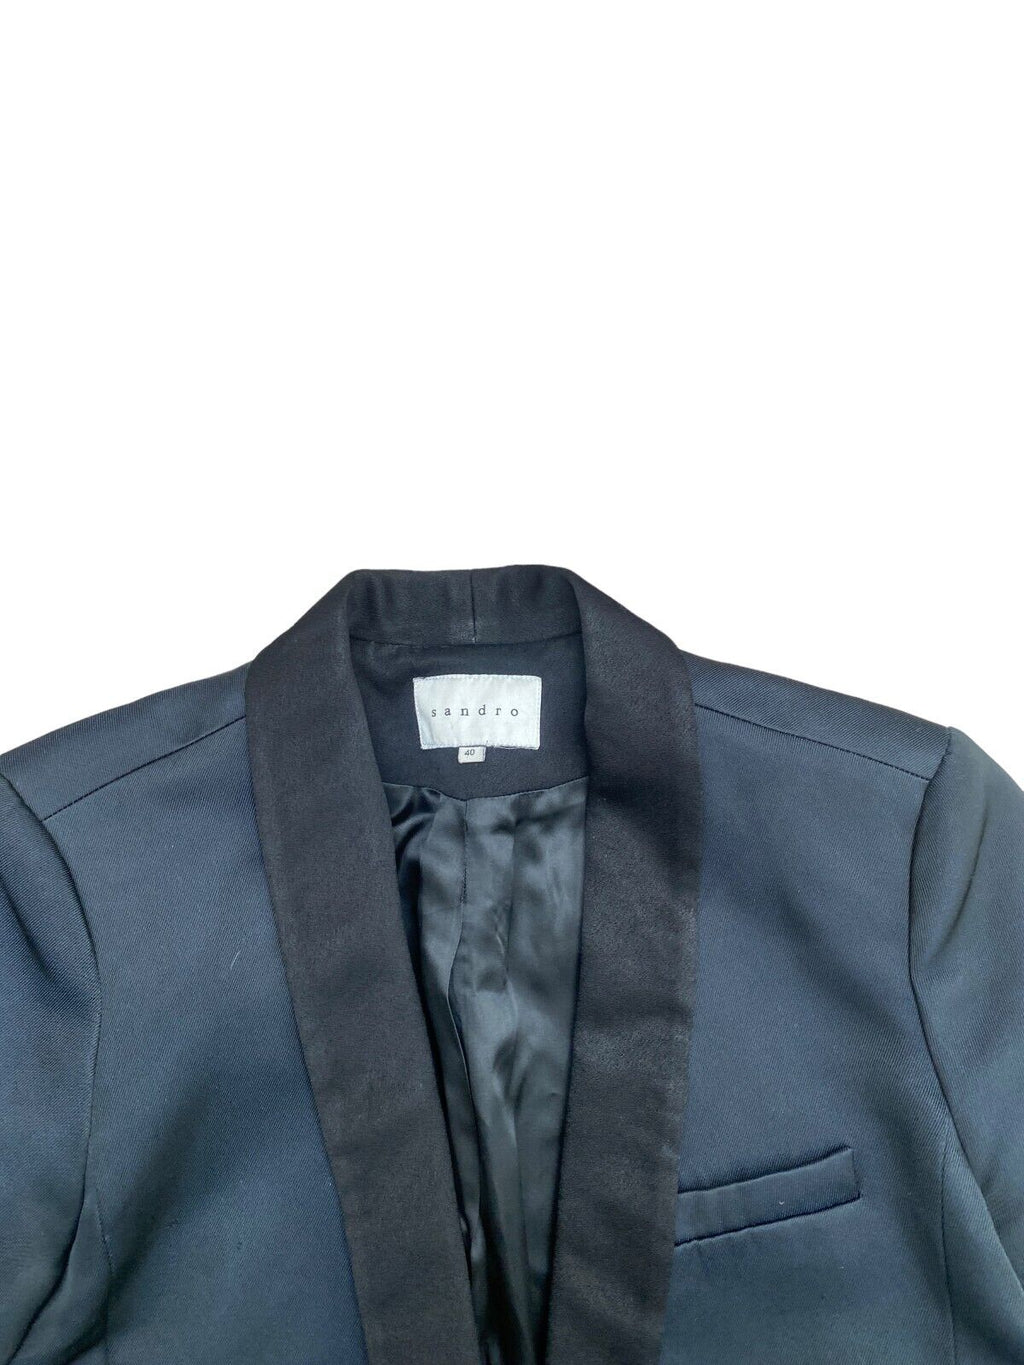 Black Tuxedo Blazer Jacket